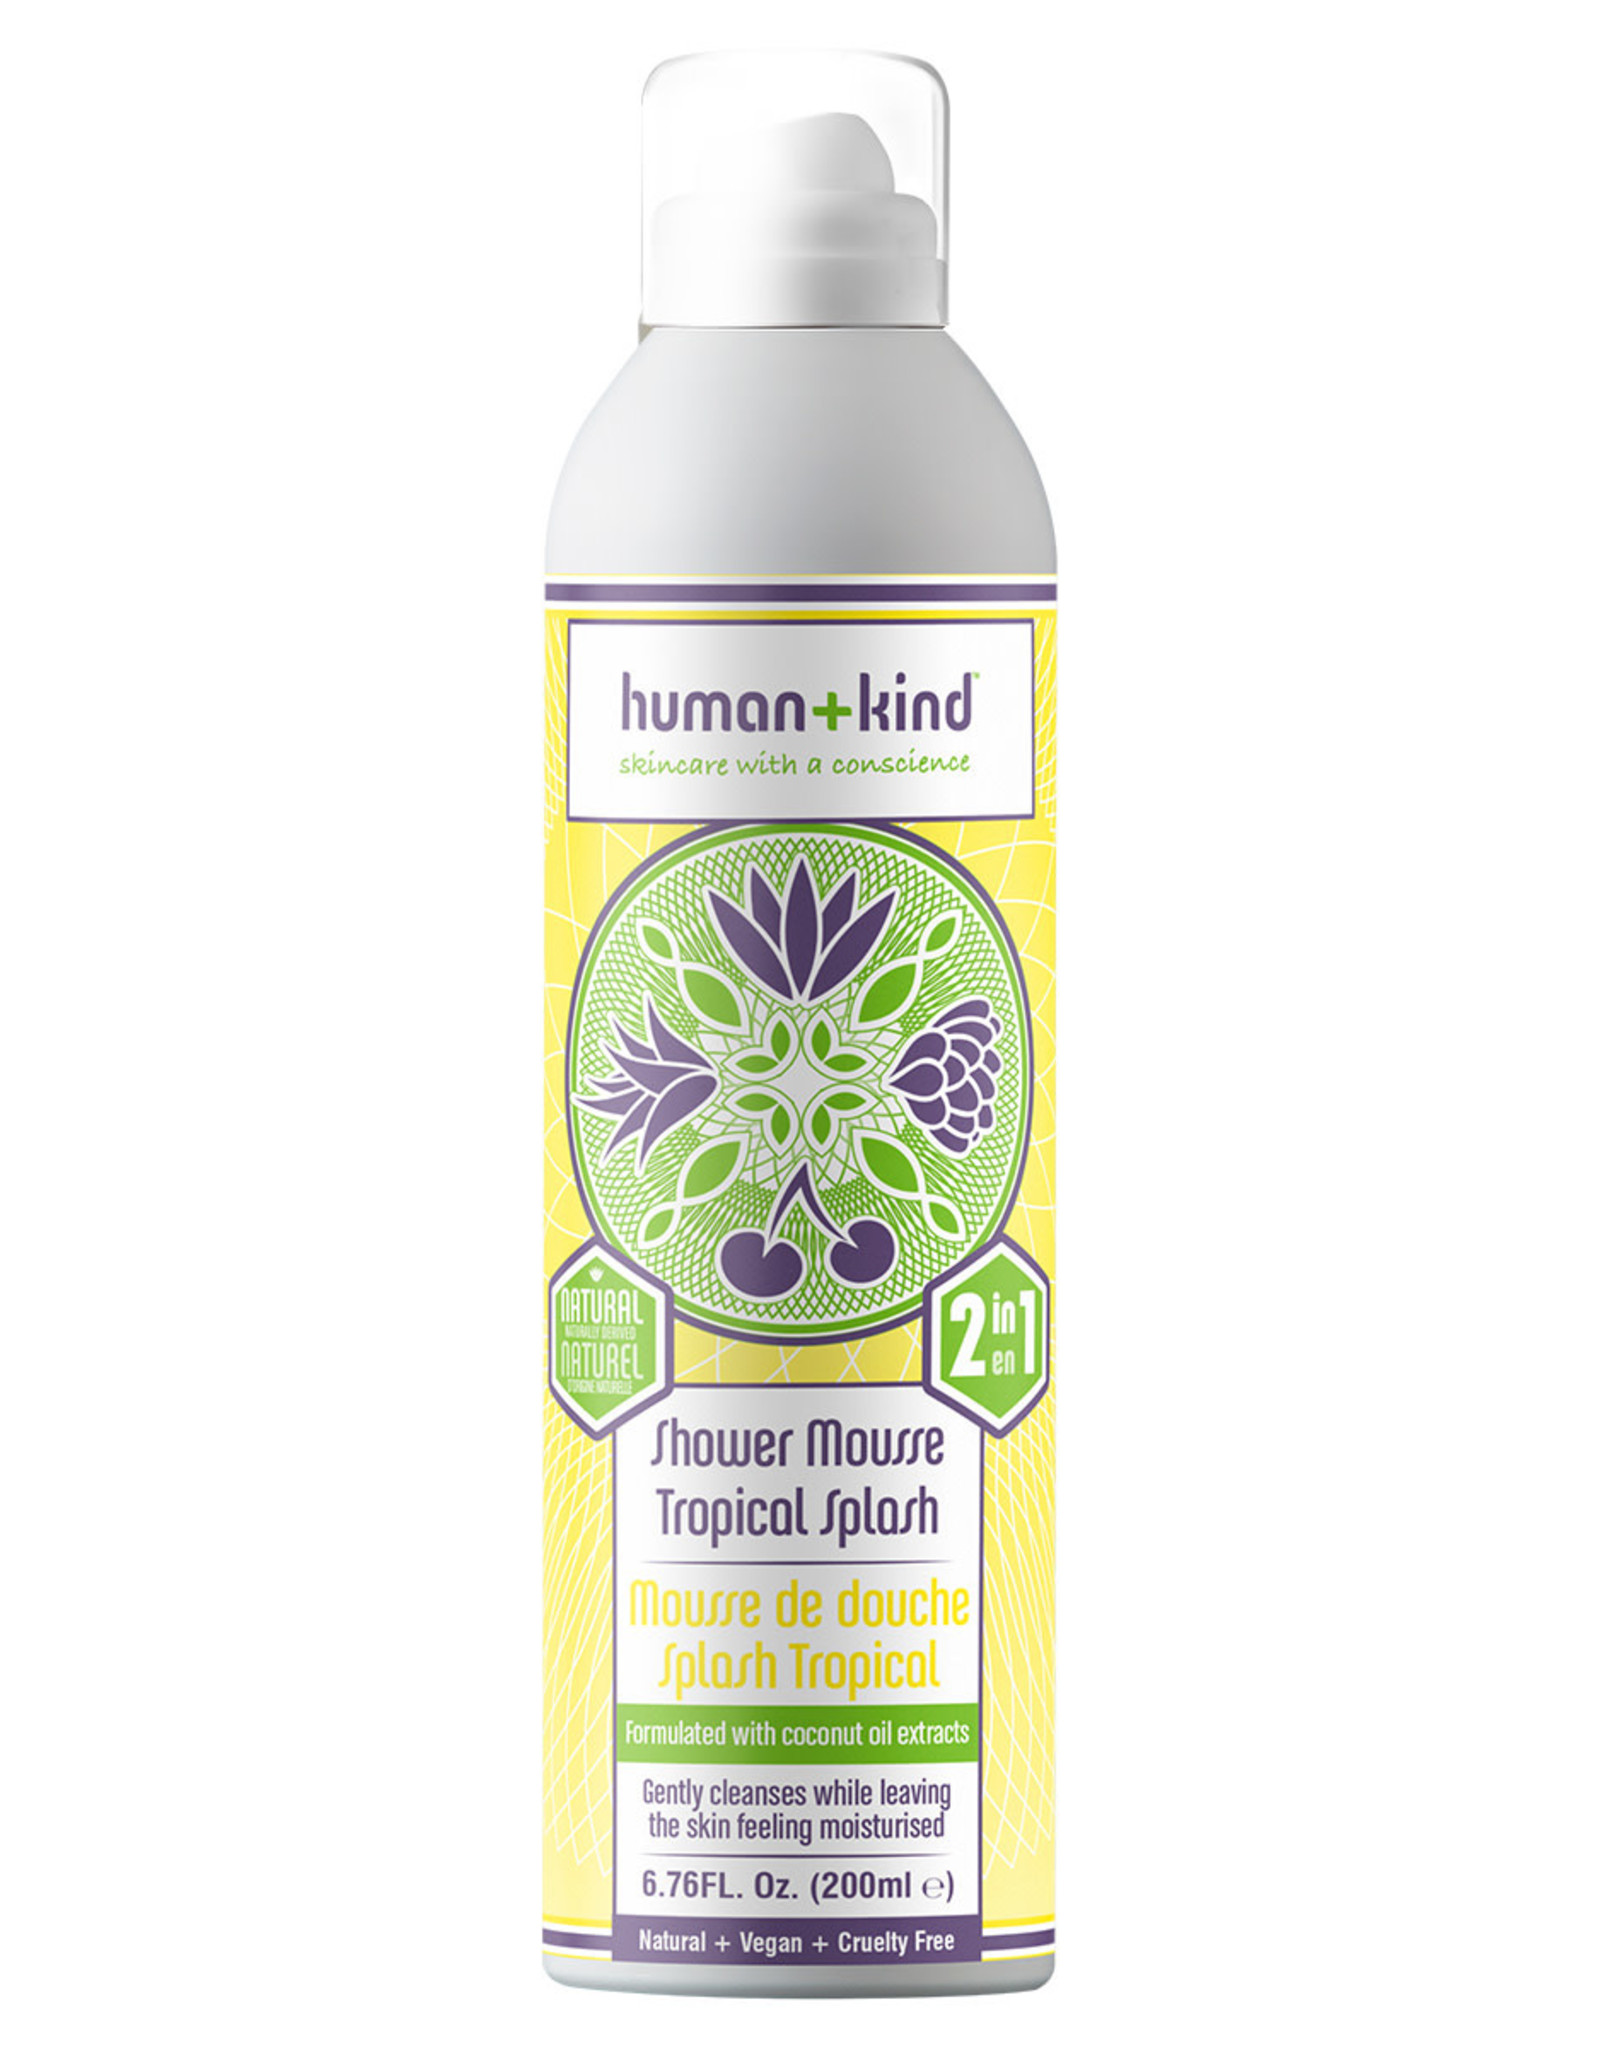 human+kind Foam Shower Tropical Splash Vegan 200 ml